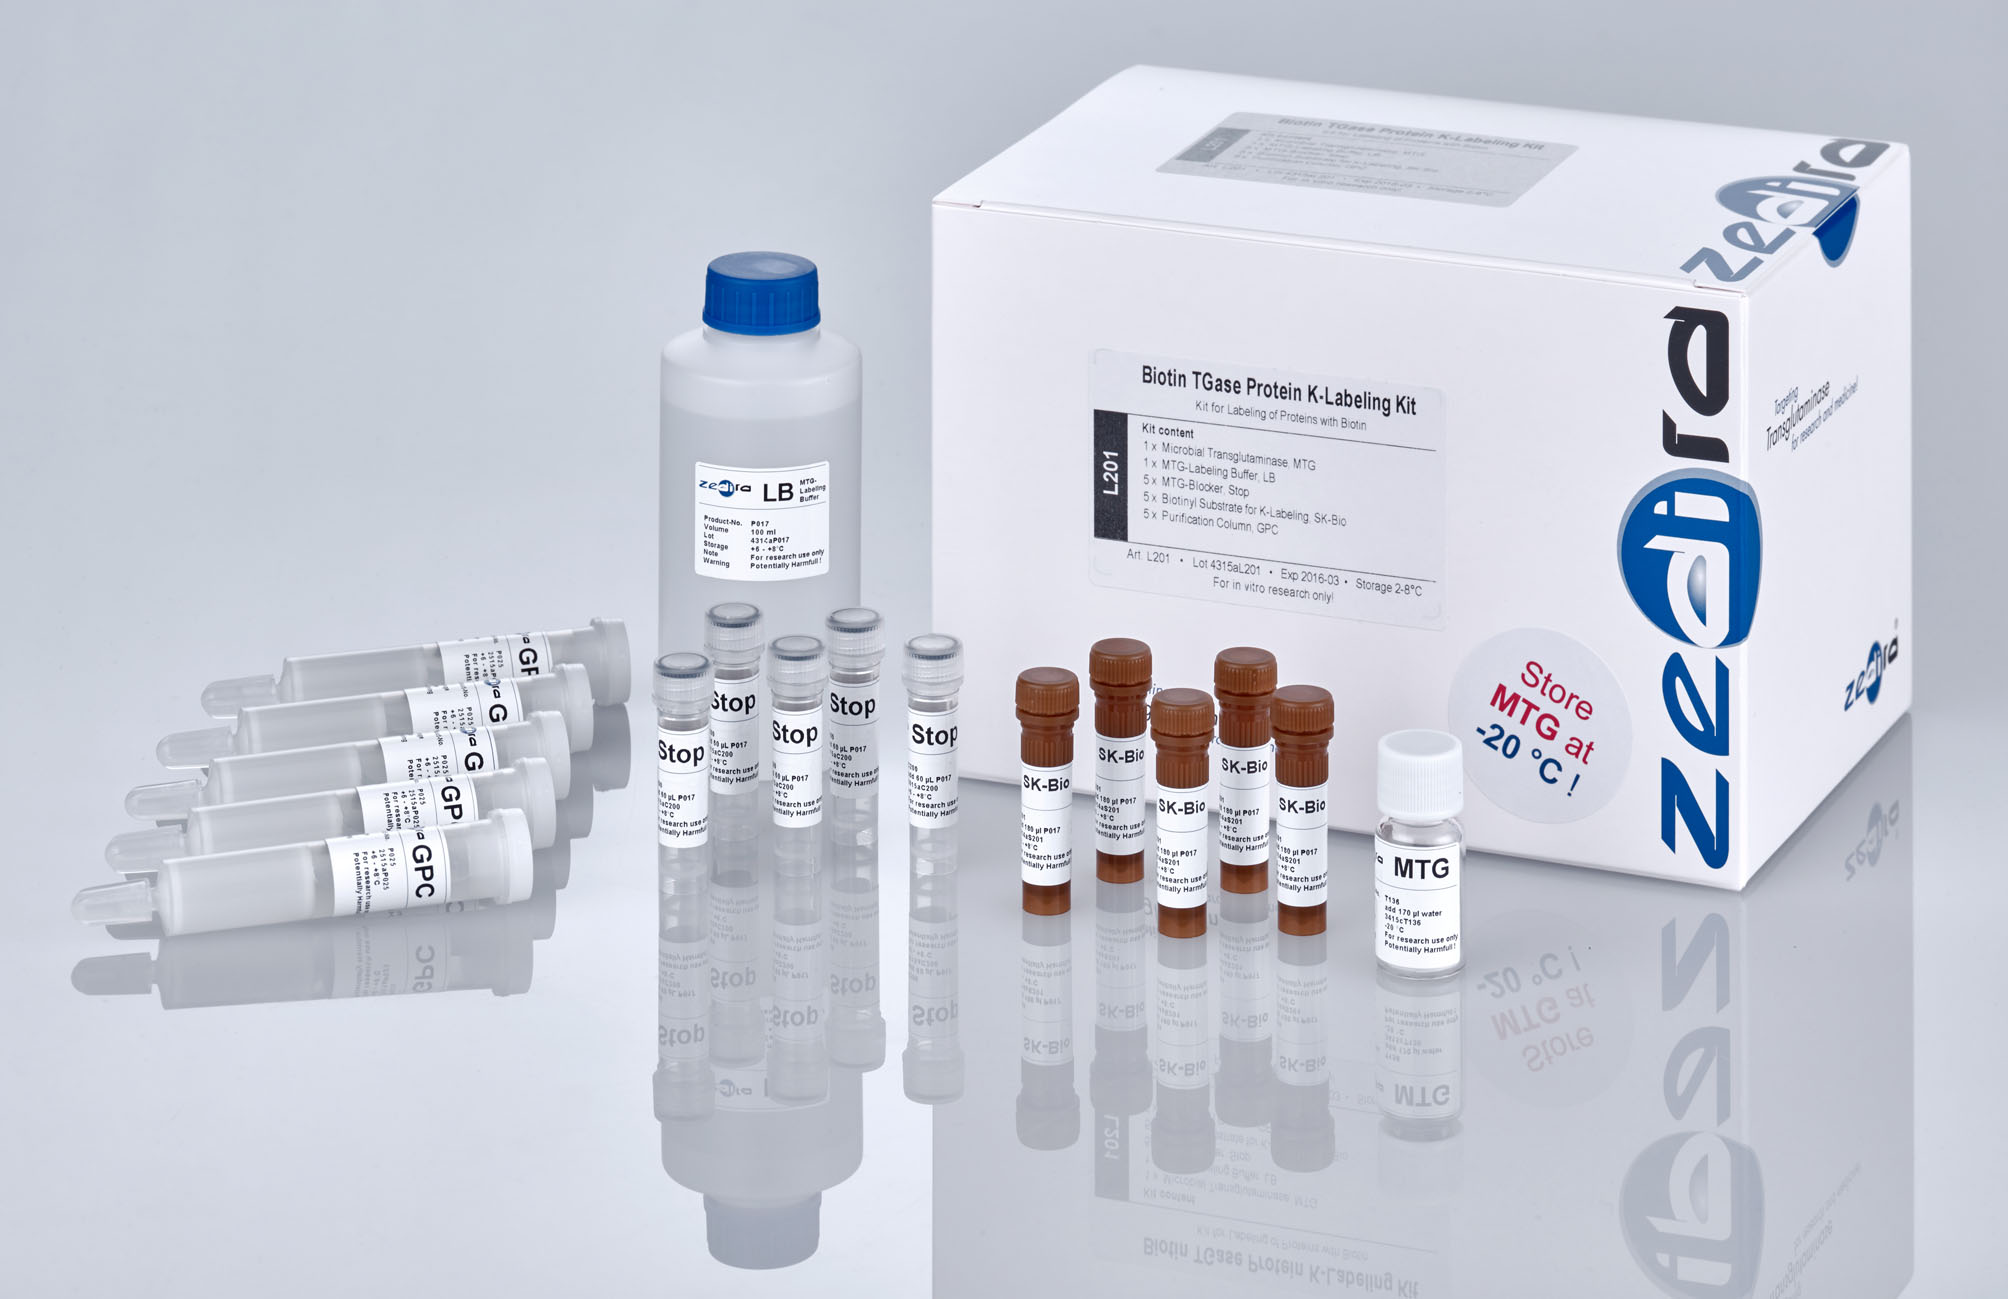 Biotin TGase Protein Labeling Kit L201 Zedira